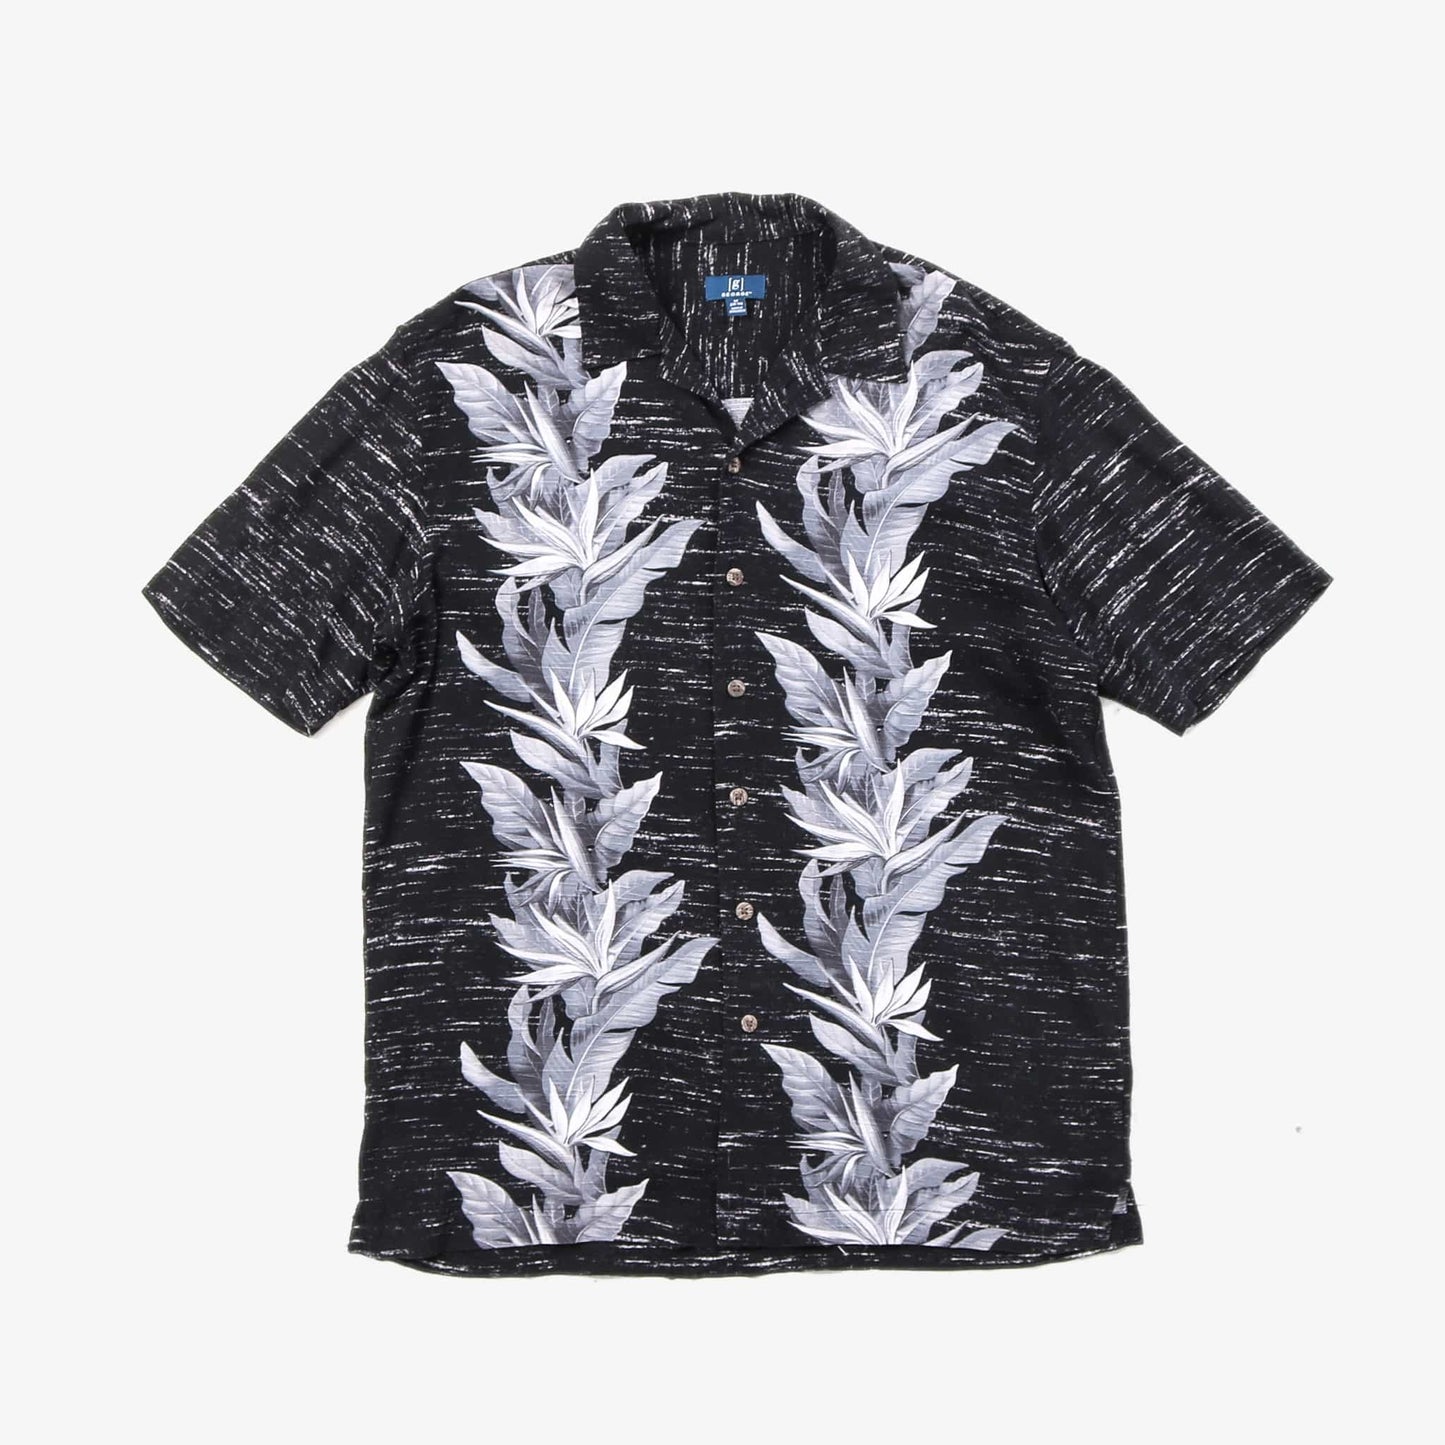 'Black and White Flowers' Hawaiian Shirt - American Madness